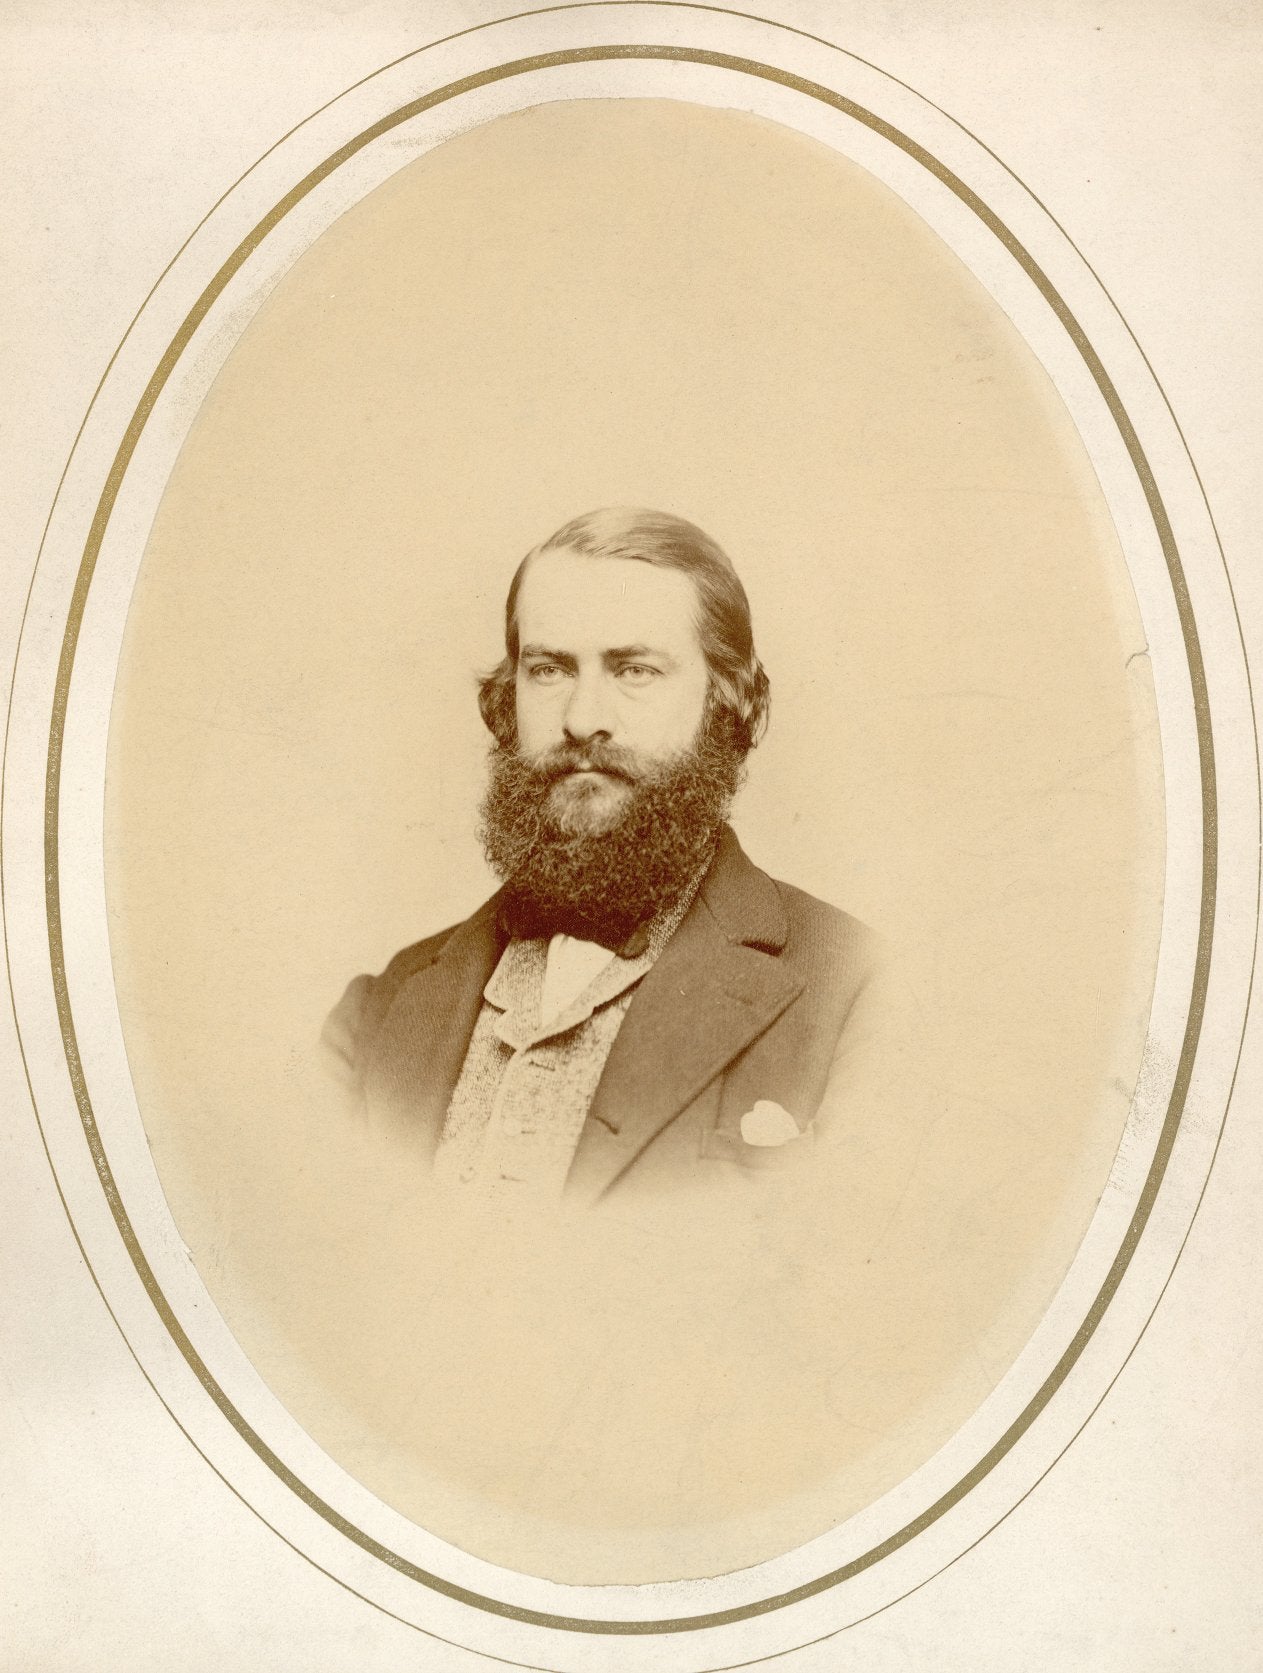 Joseph Leidy, c. 1870